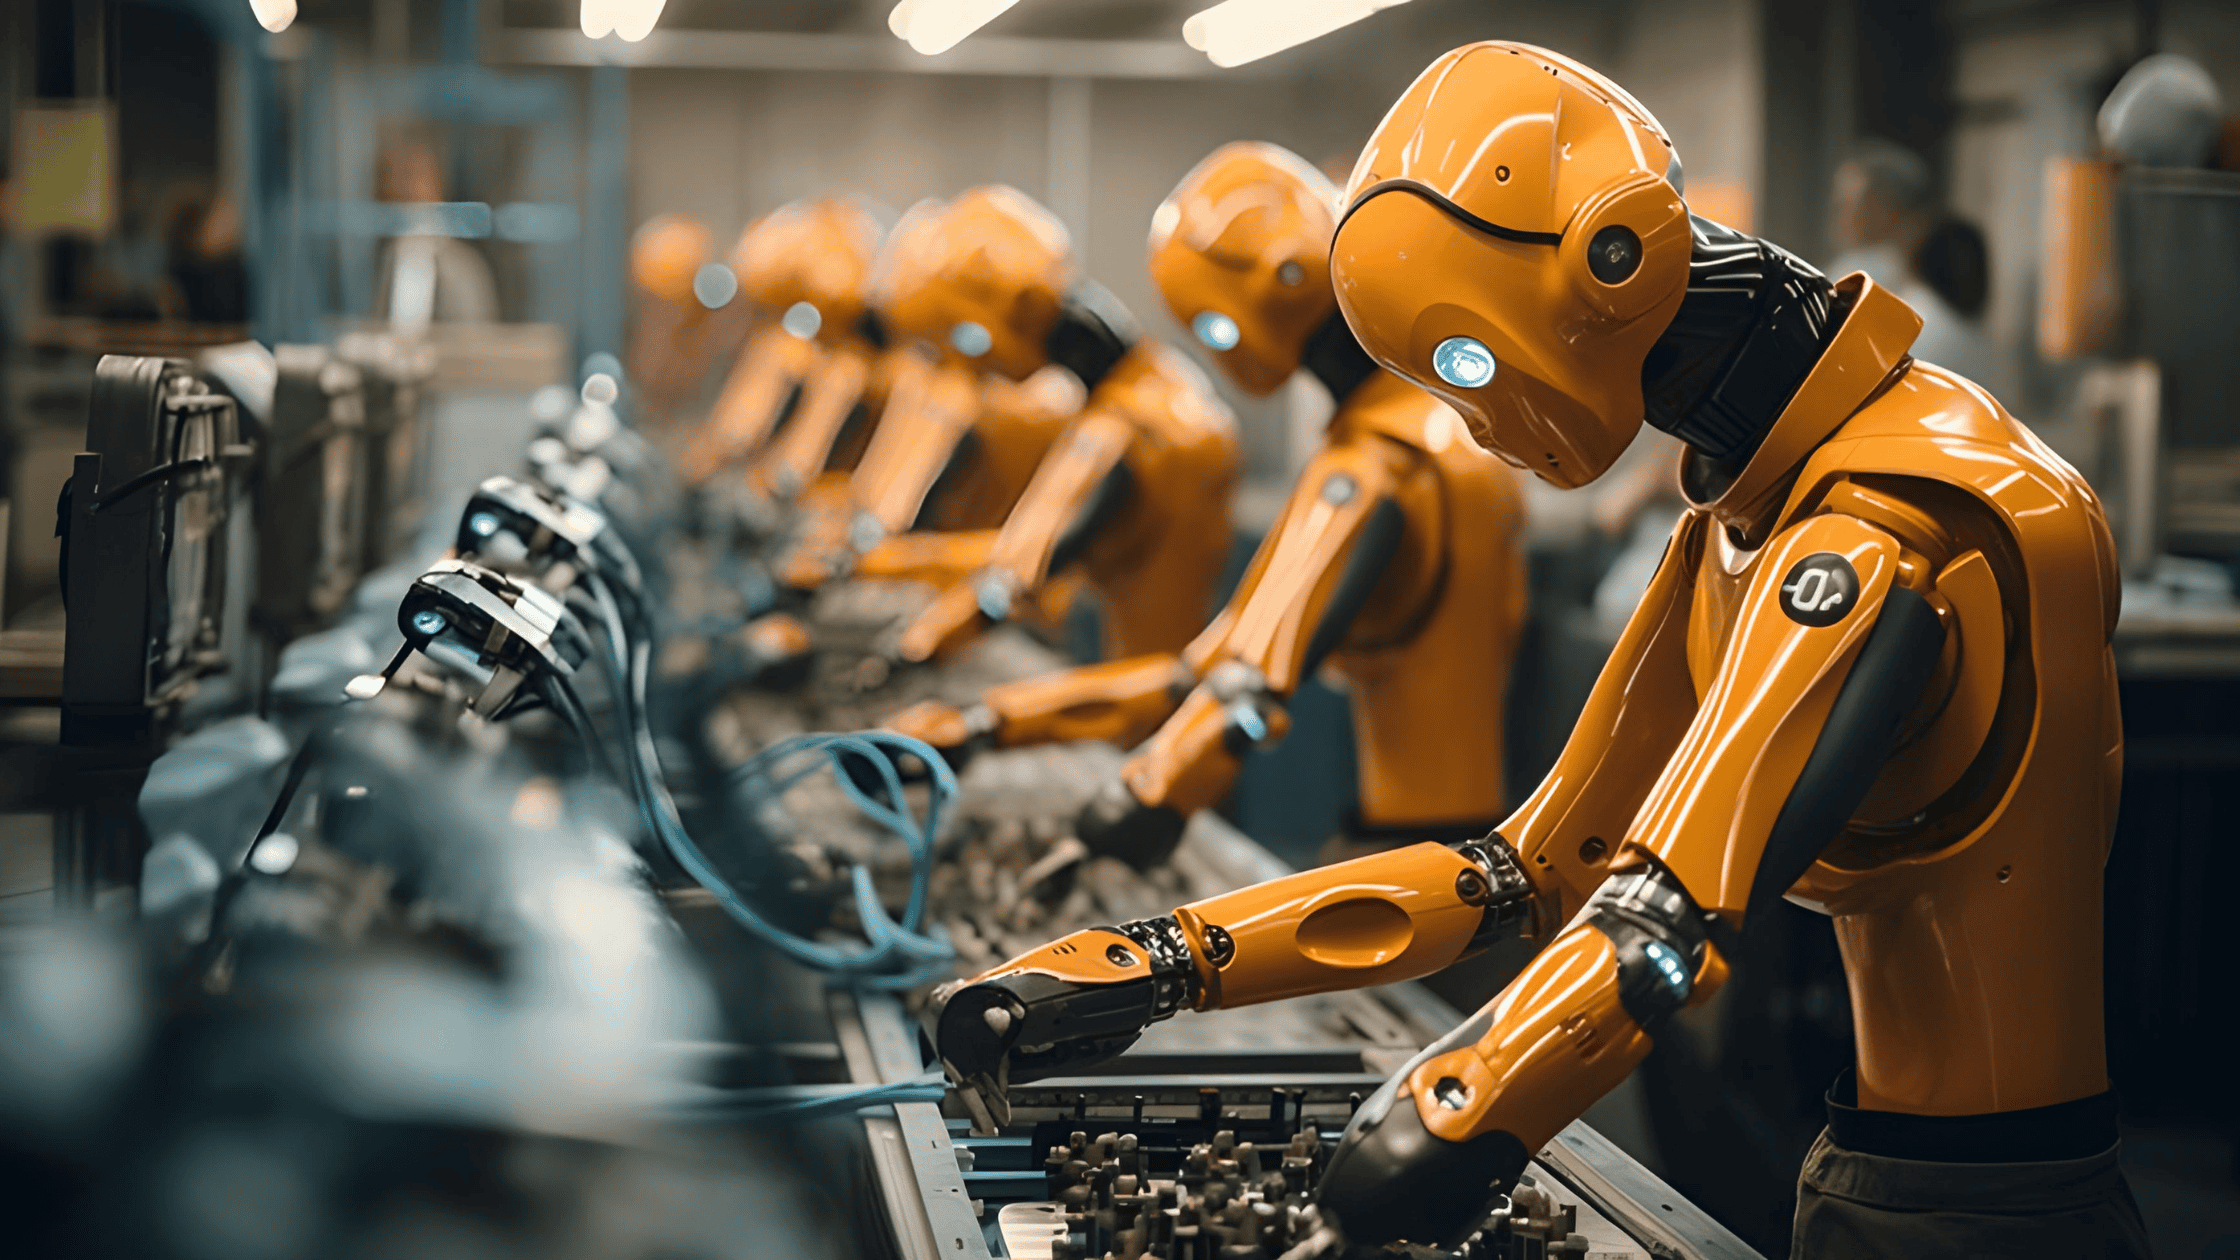 Robotic Process Automation (RPA)